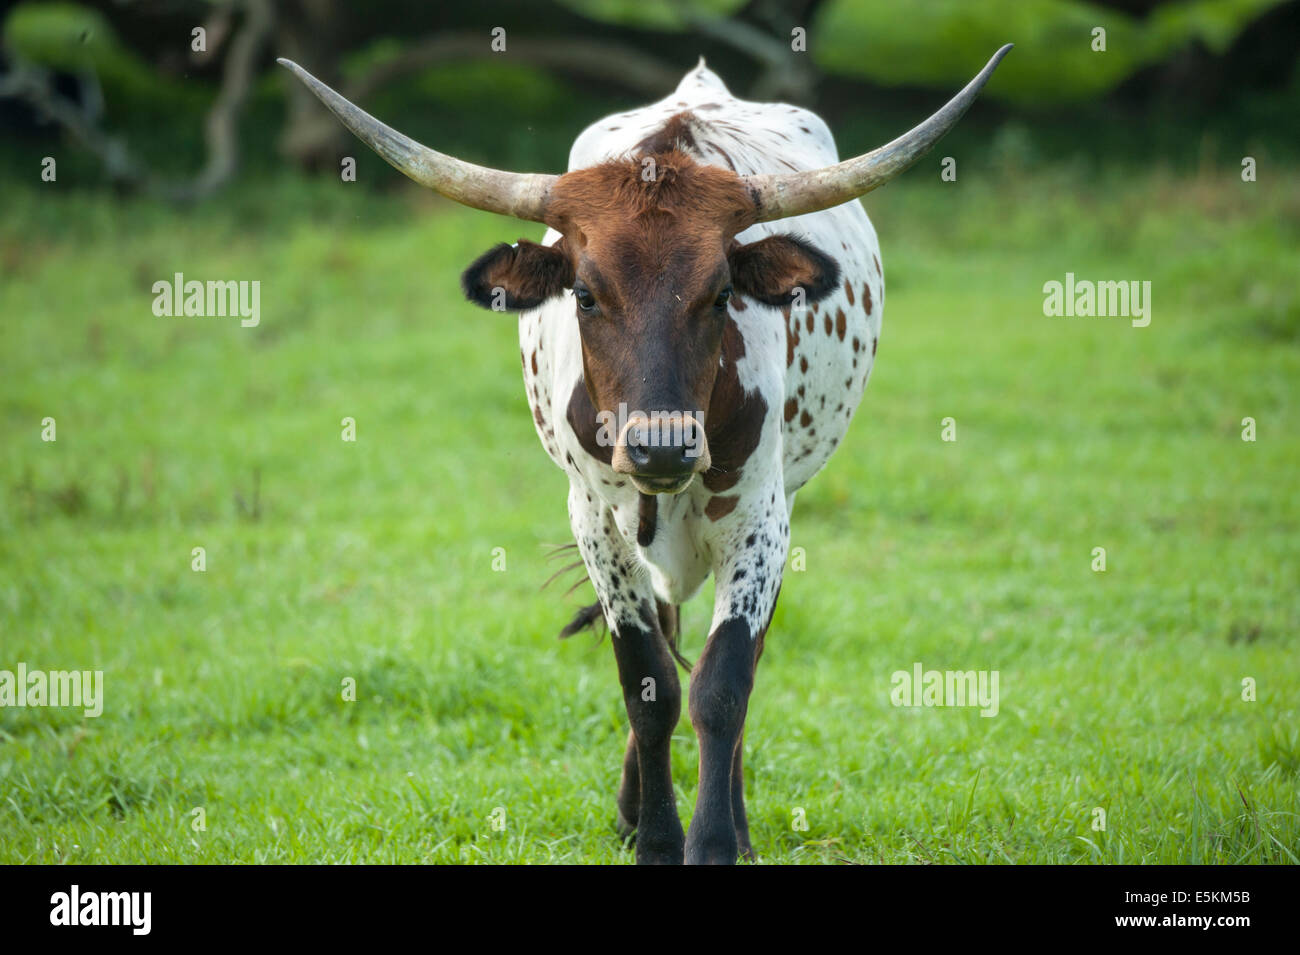 Texas Longhorn cattle Stock Photo